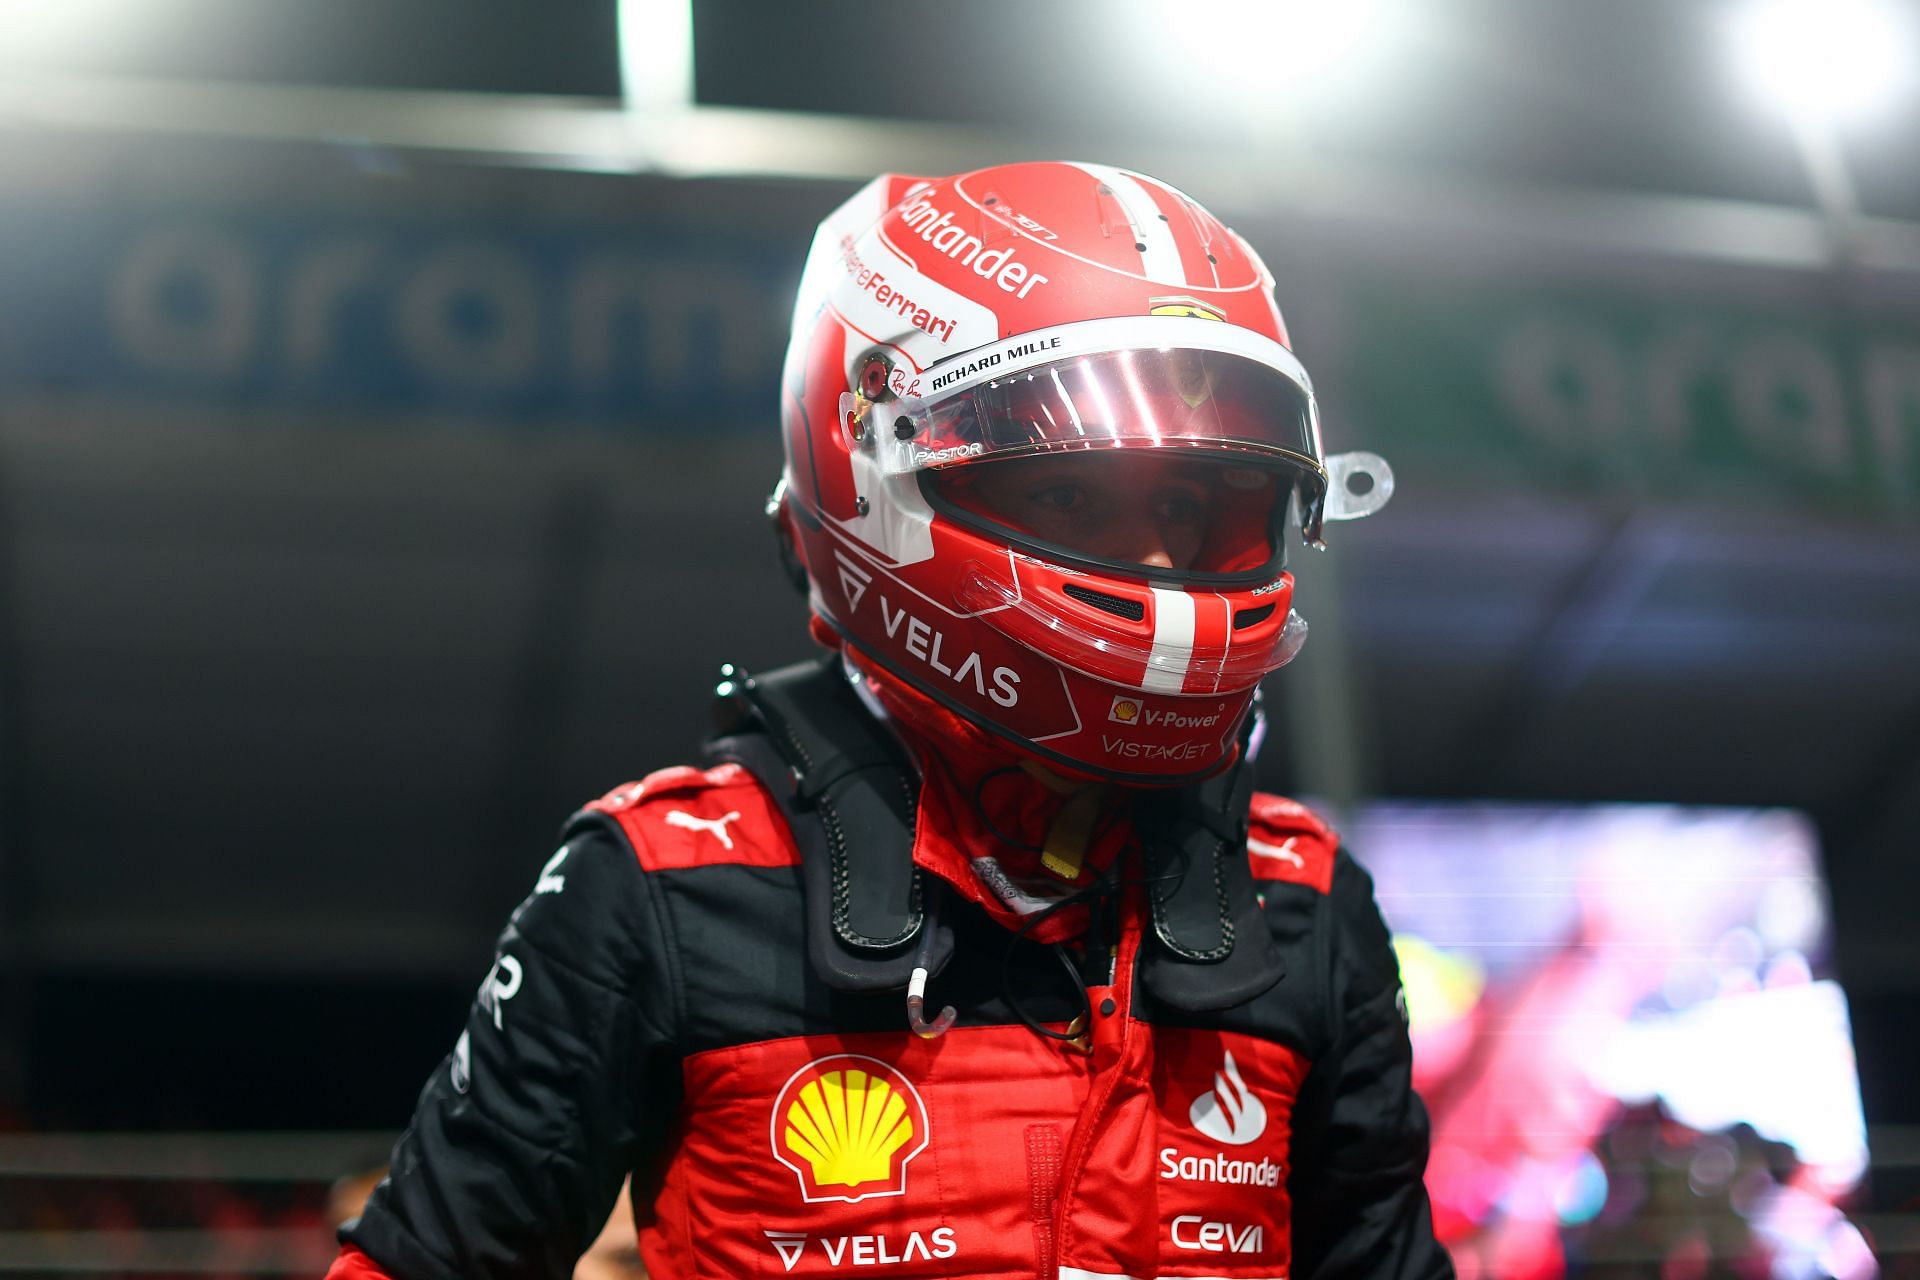 F1 Grand Prix of Saudi Arabia - Charles Leclerc finishes P2 in Jeddah.